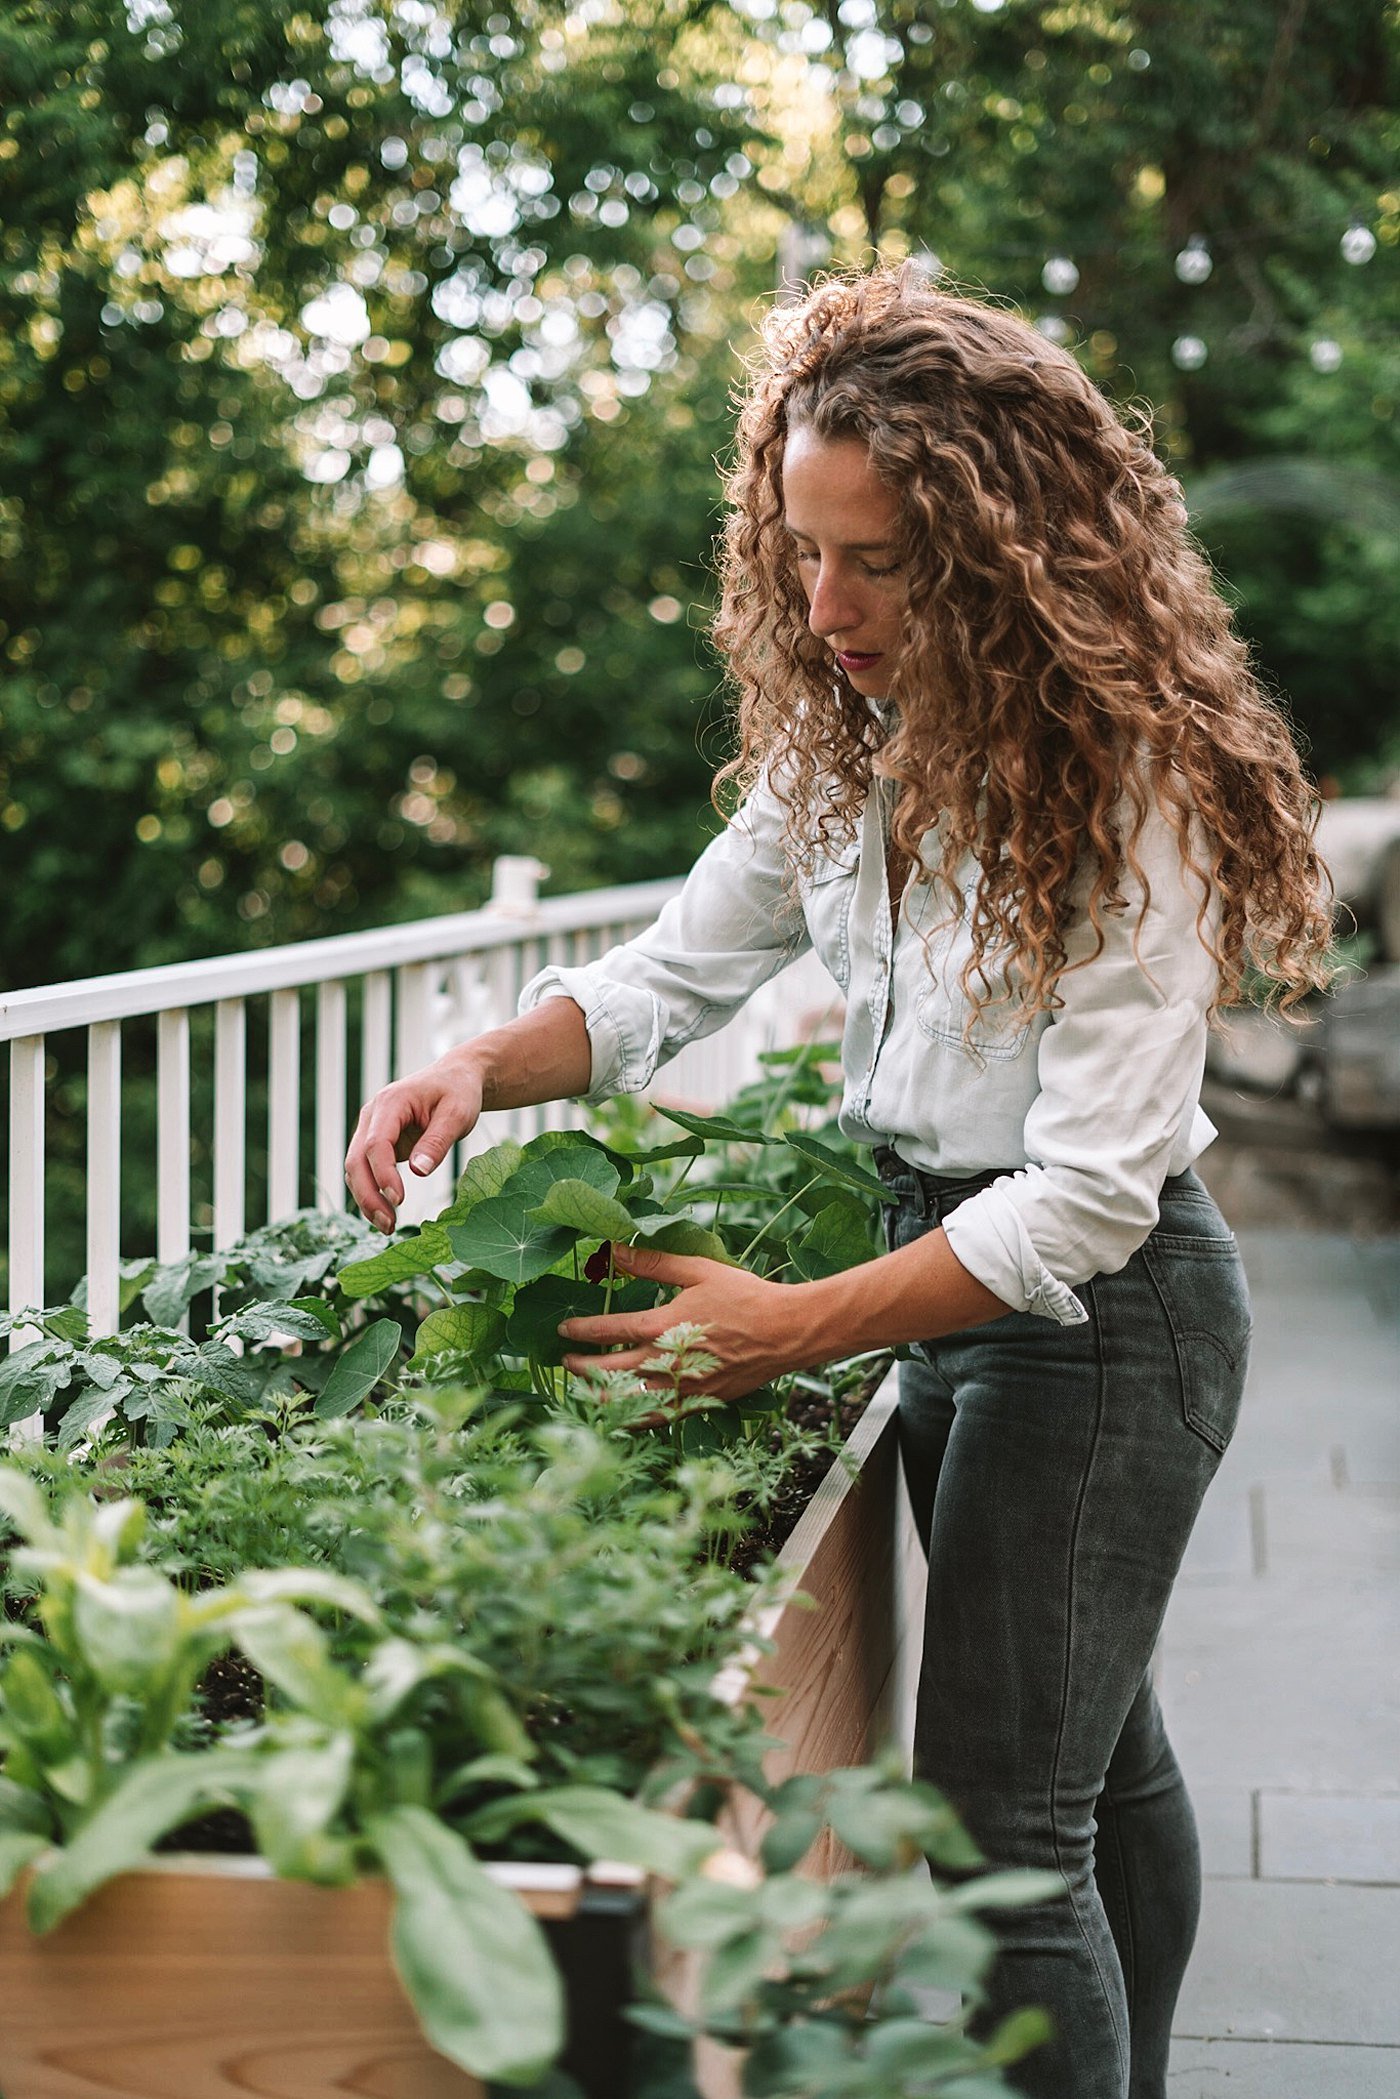 home vegetable gardening ideas